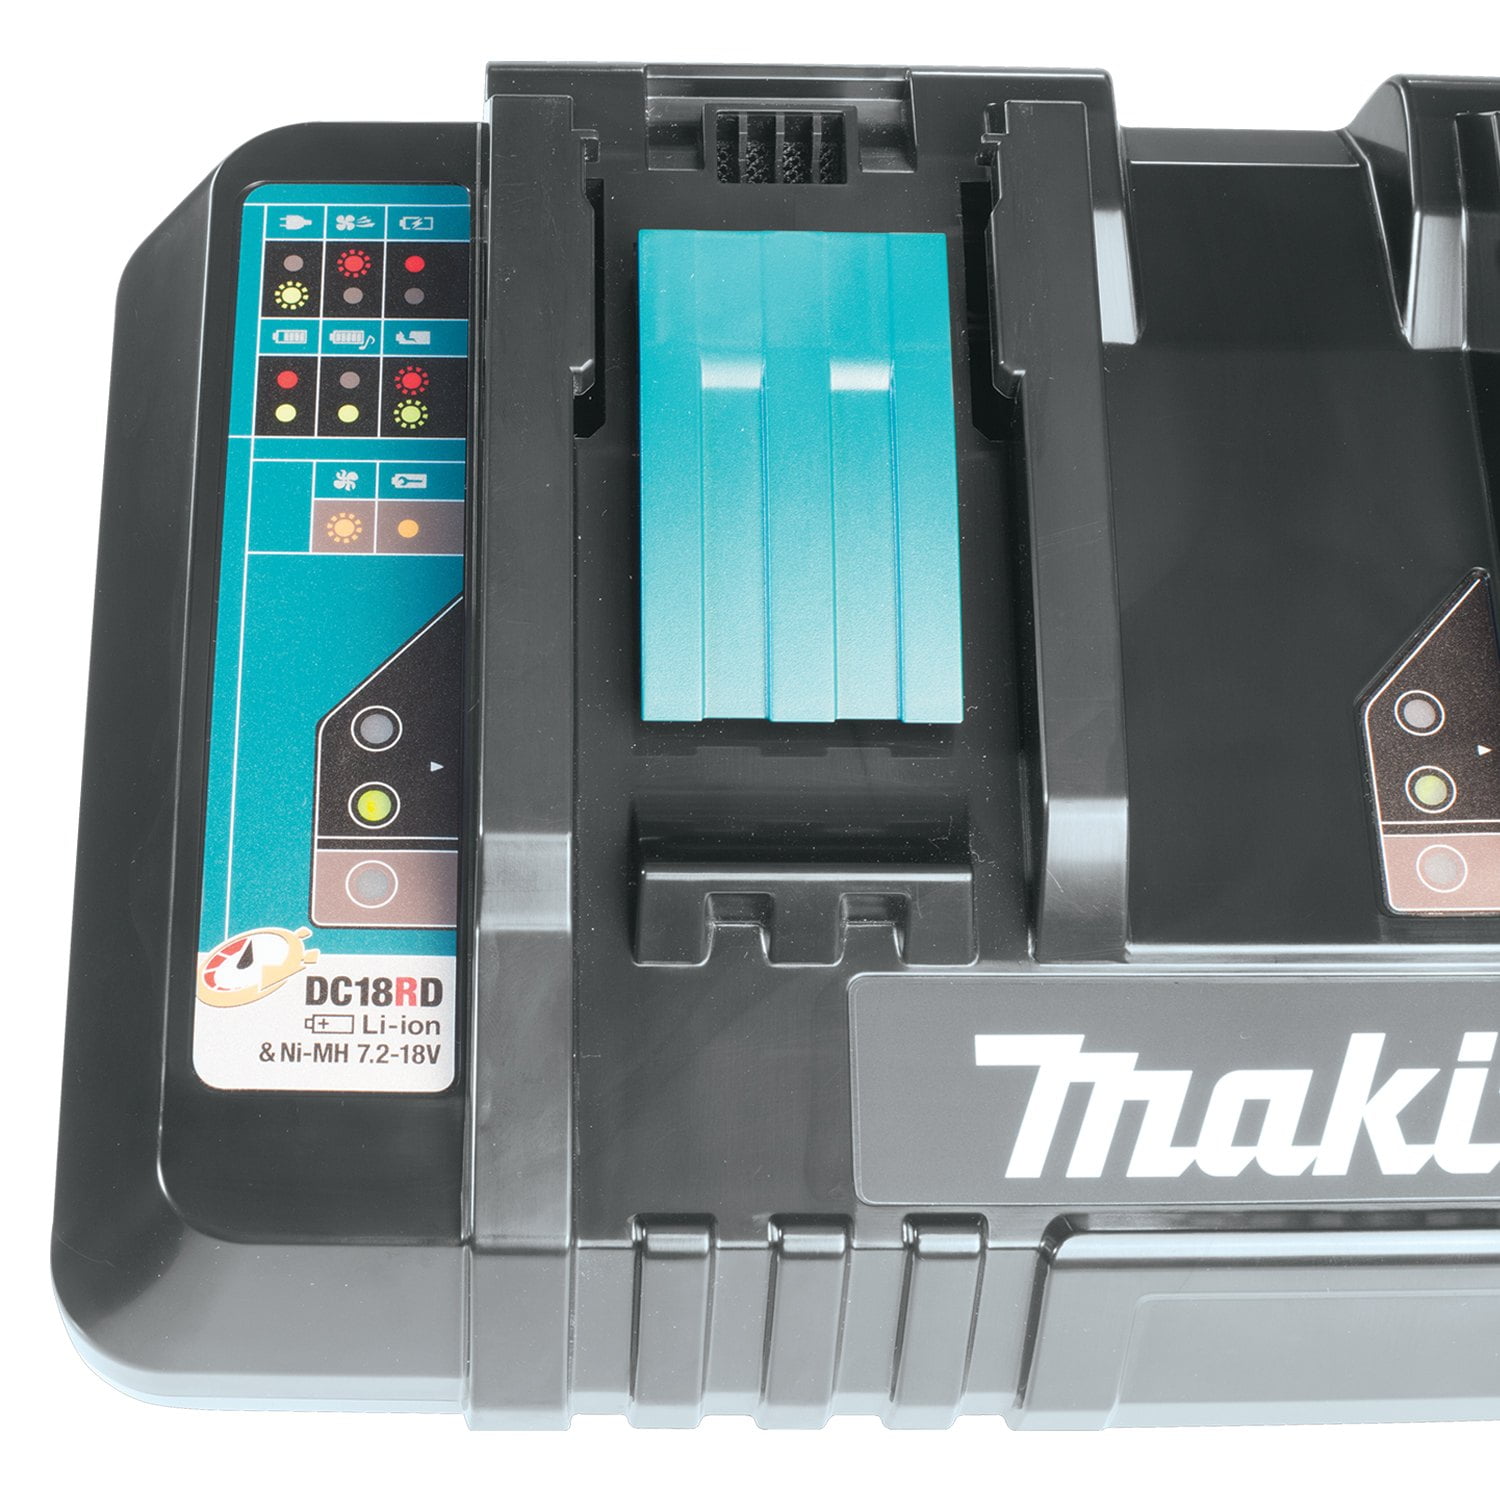 For Makita DC18RD 7.2V-18V Li-ion Dual Rapid Battery Charger LXT 2 USB Port UK 